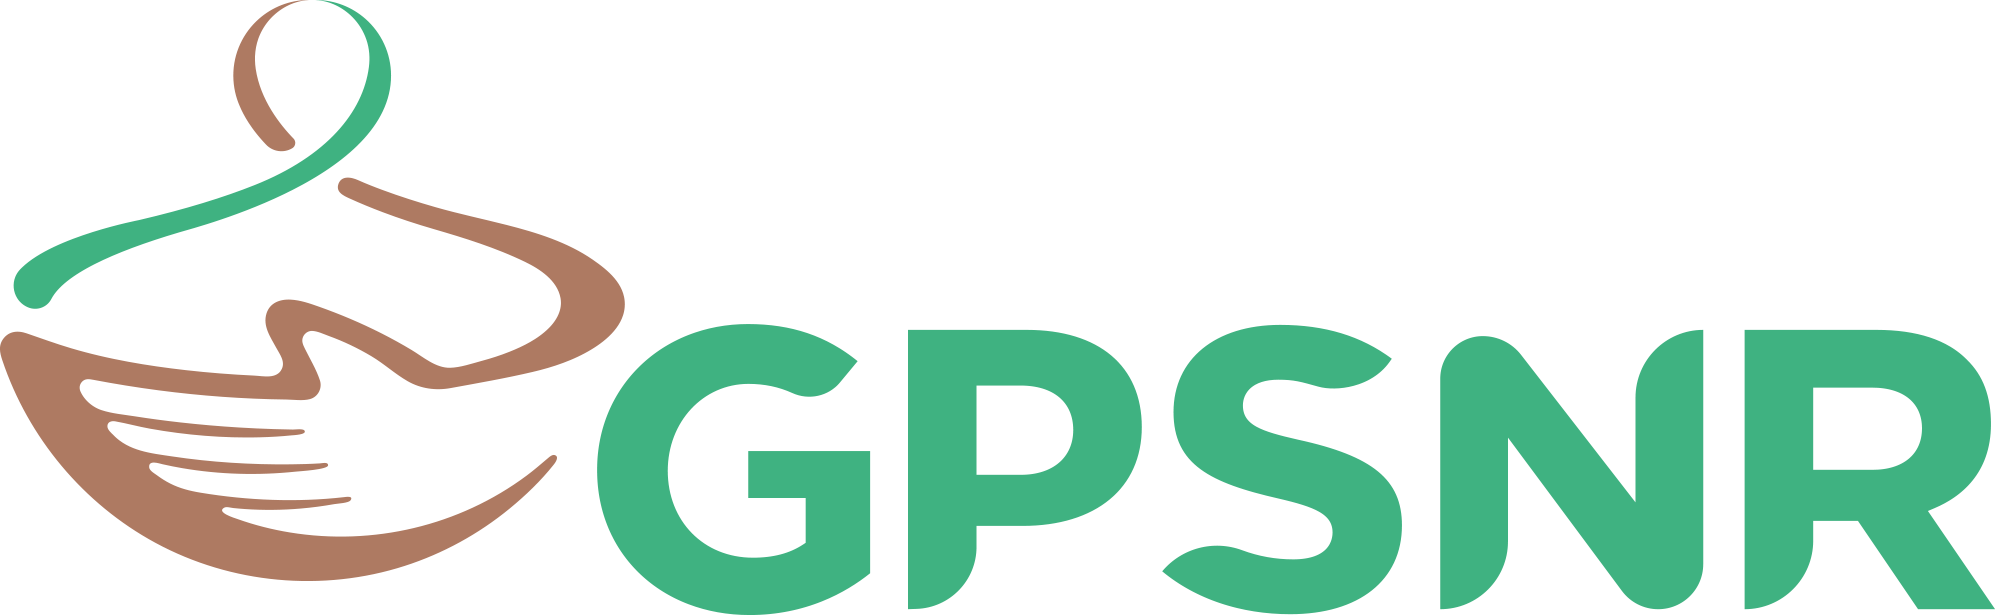 G P S N R Logo Design